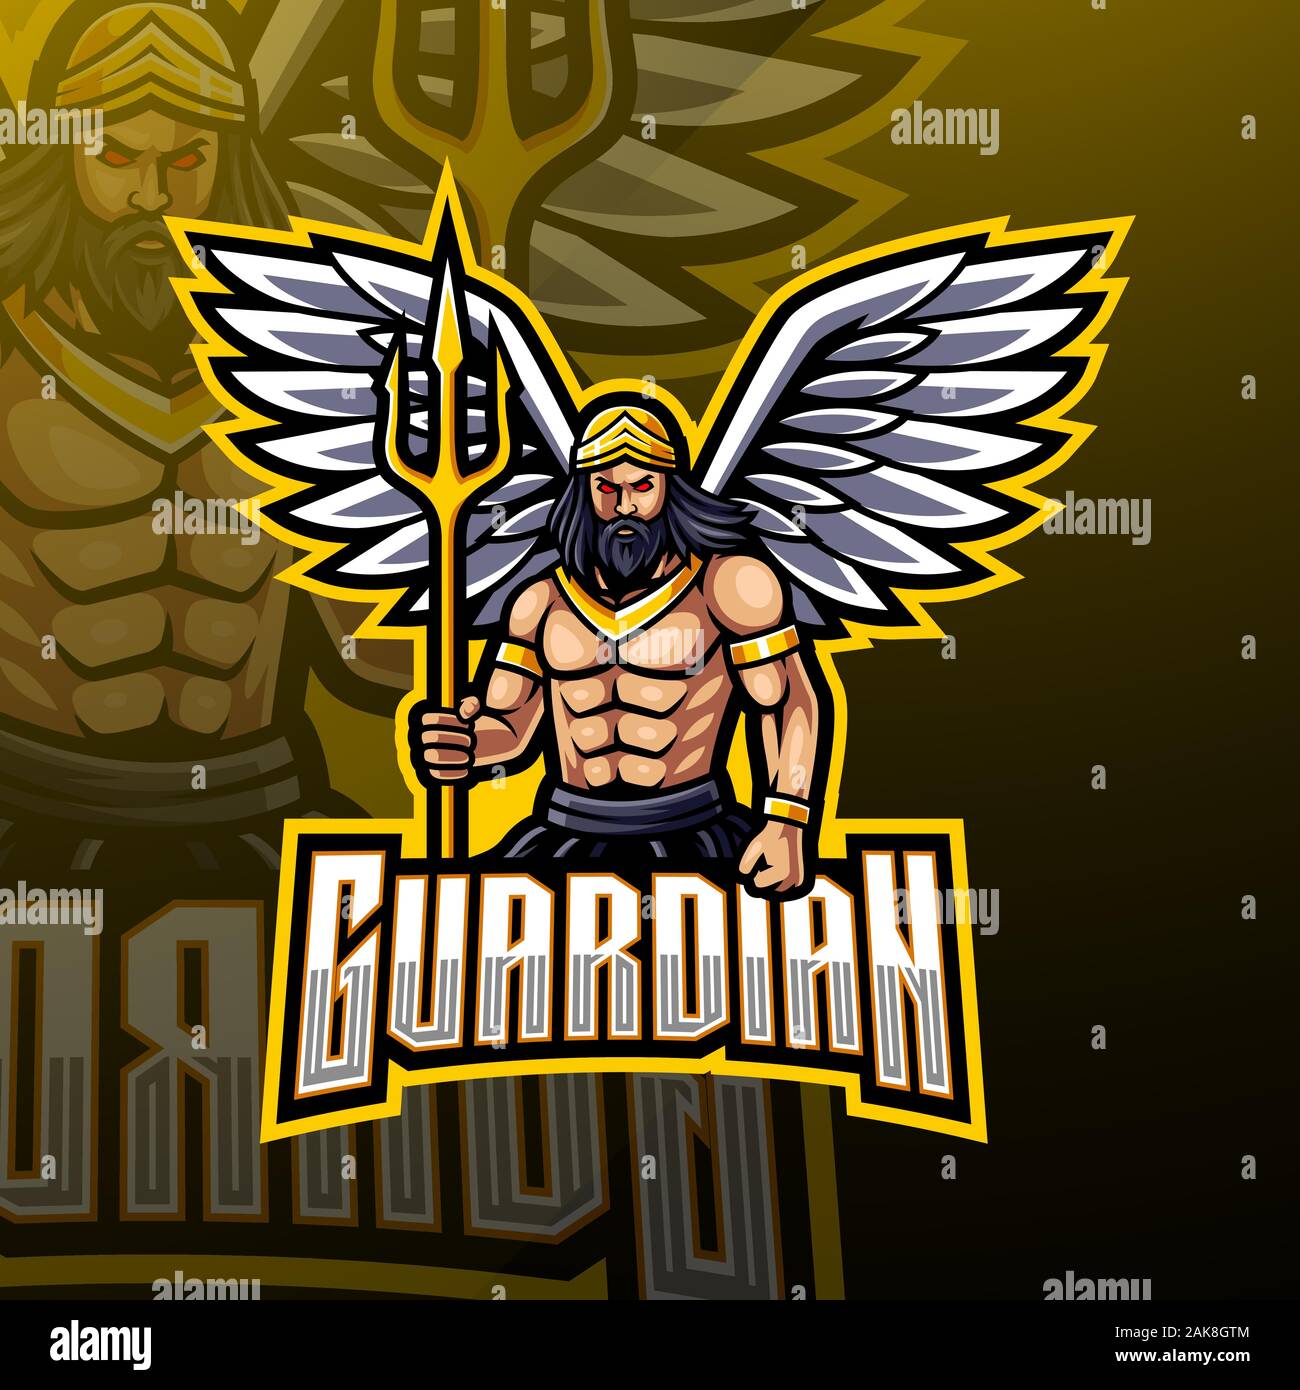 Guardian angel mascot logo design Stock Vector